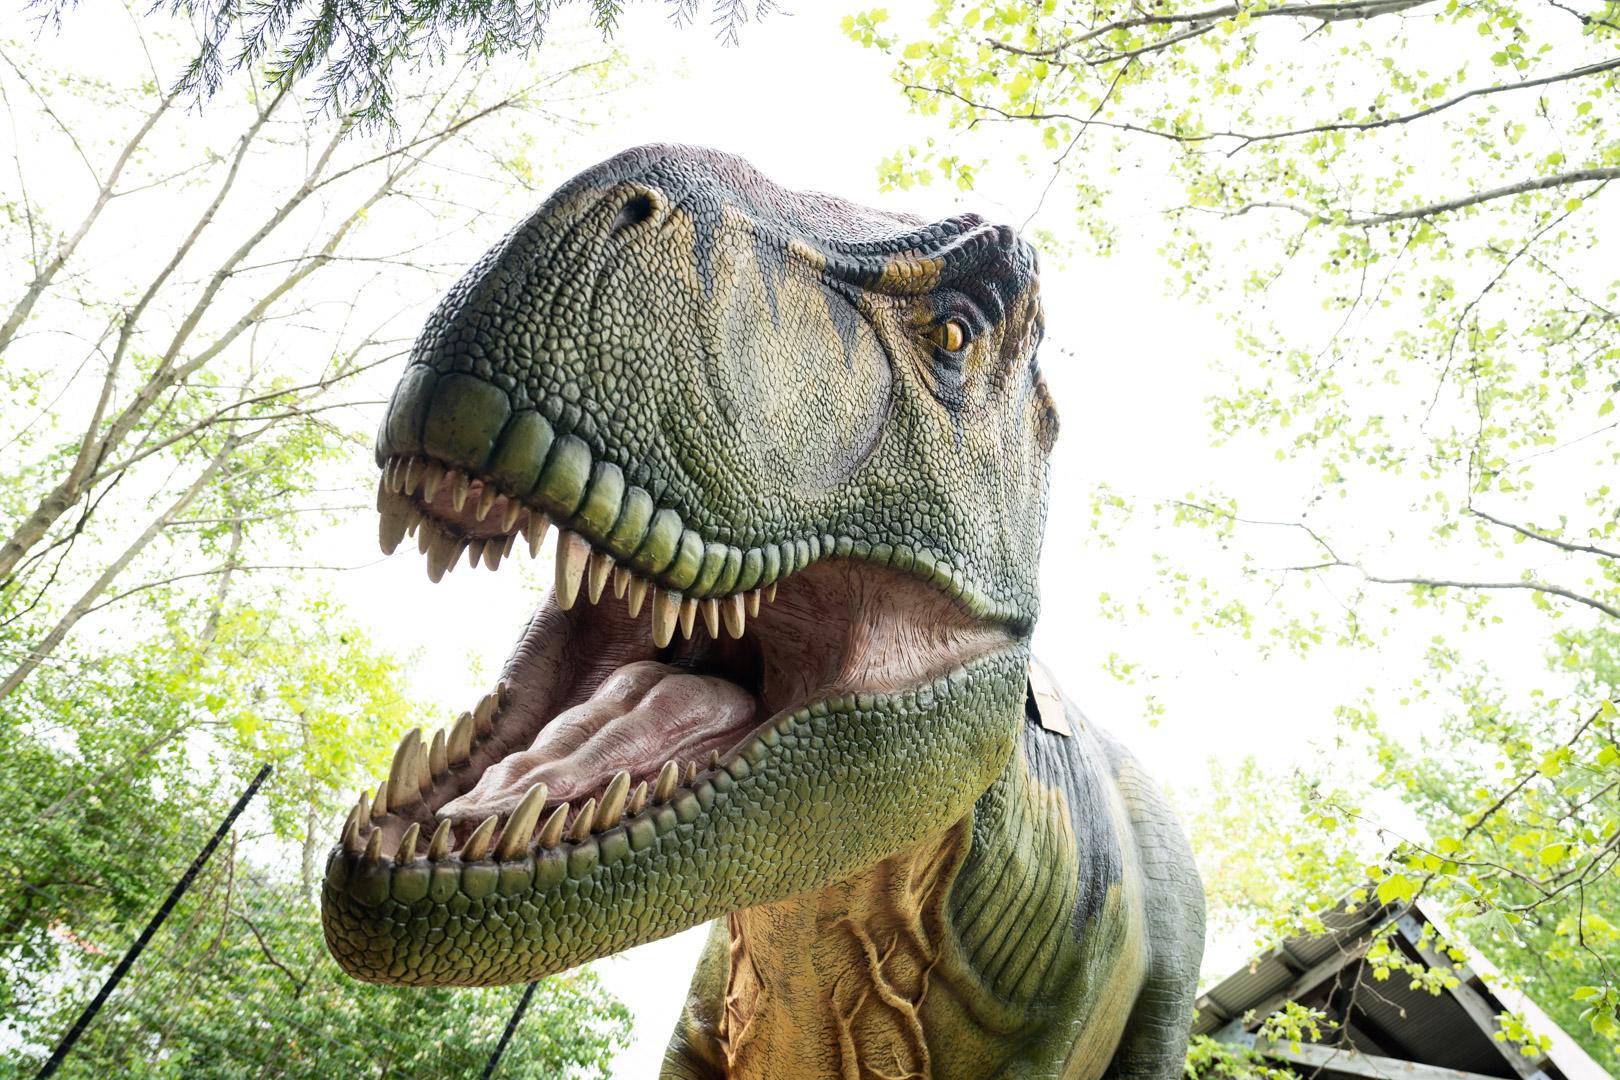 dinosaur attractions in ohio